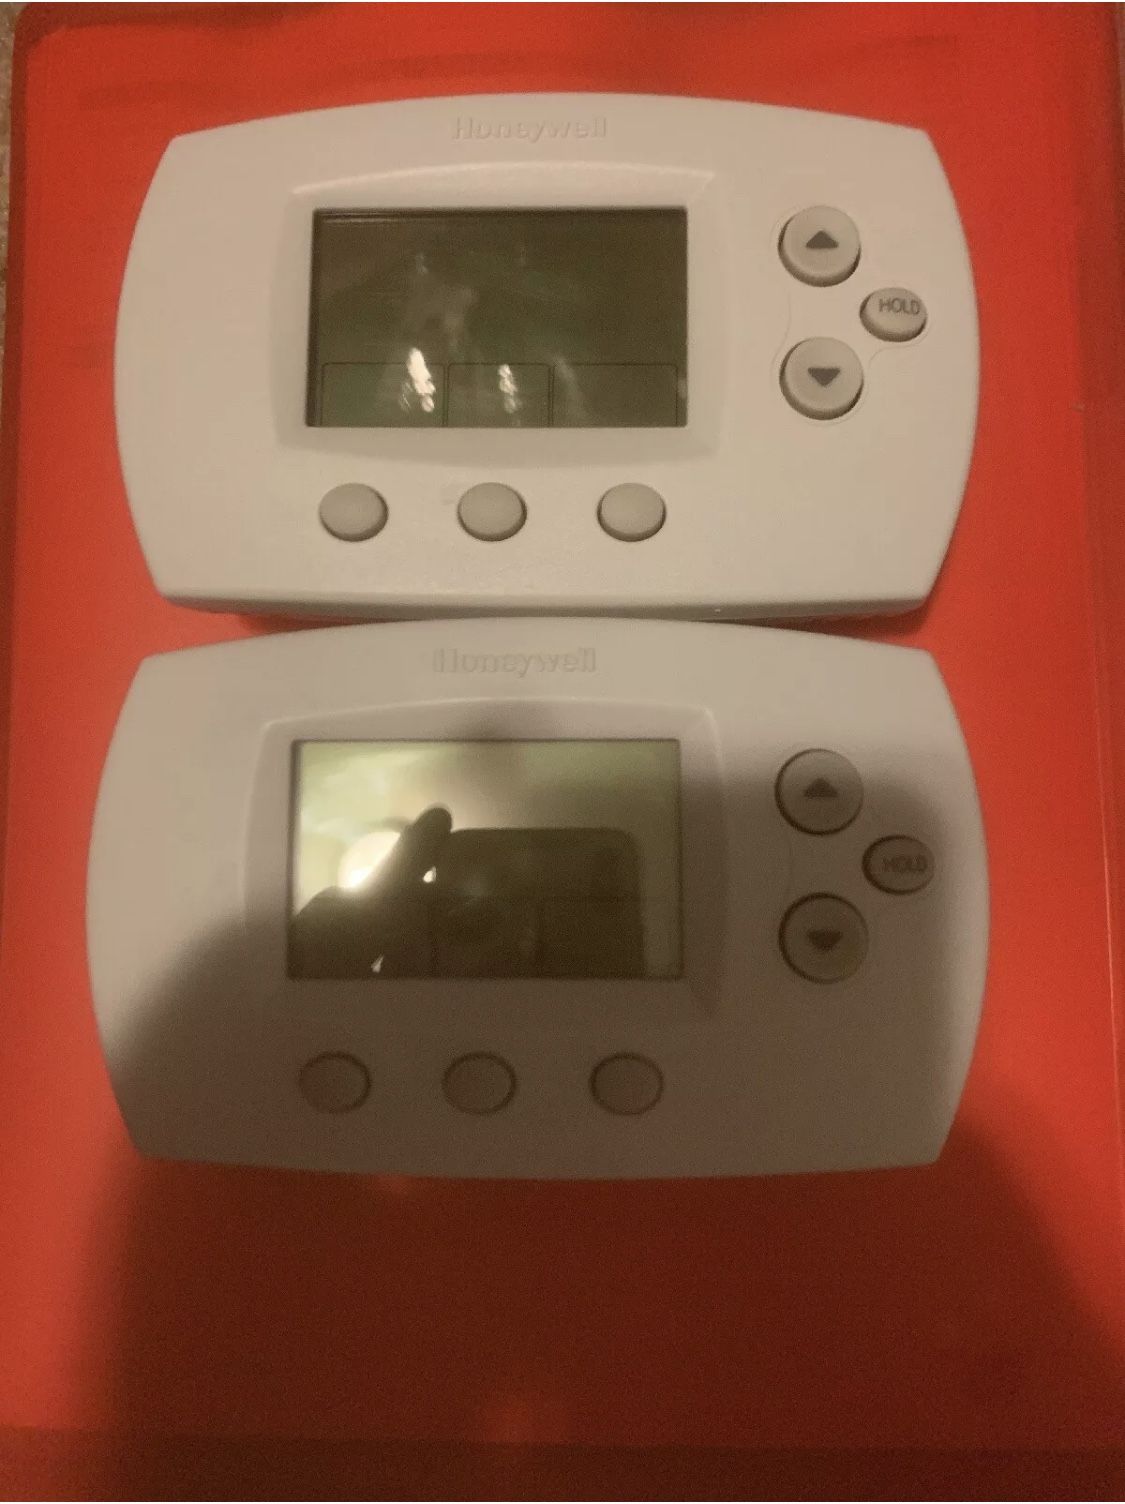 1 - Honeywell Digital Programmable Thermostats